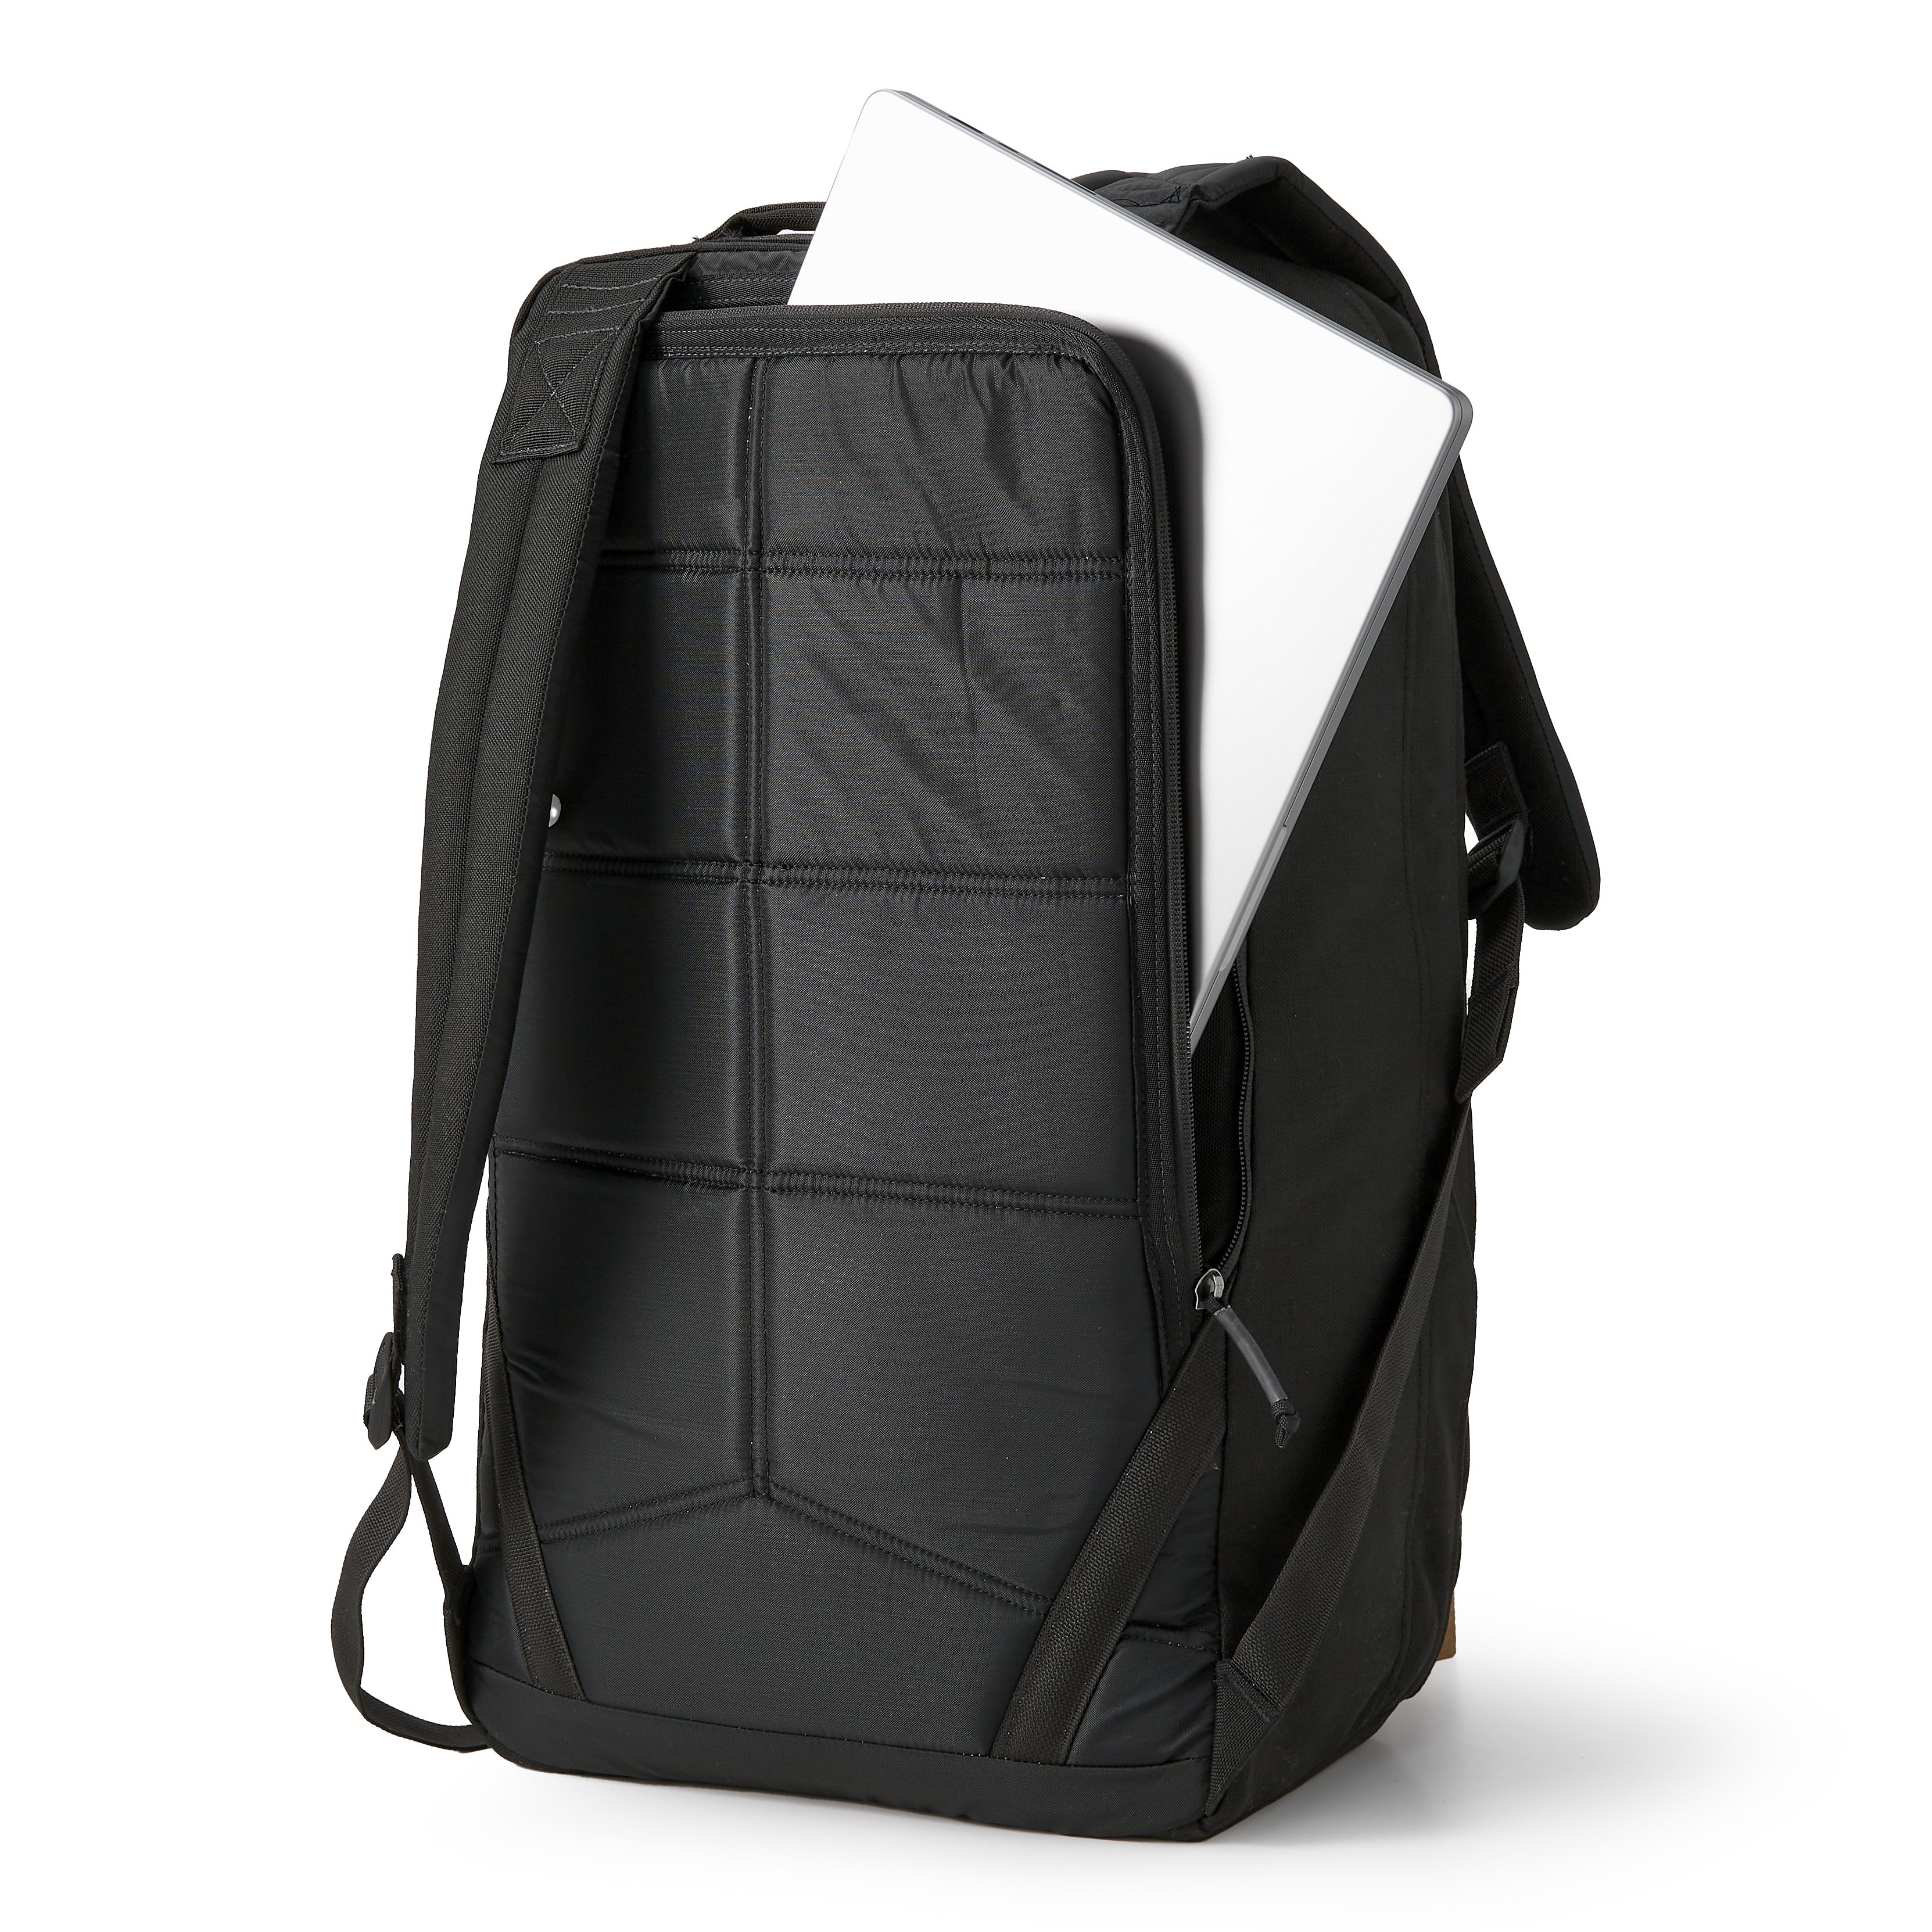 Huckberry X GORUCK GR2 Slick Backpack - 40L